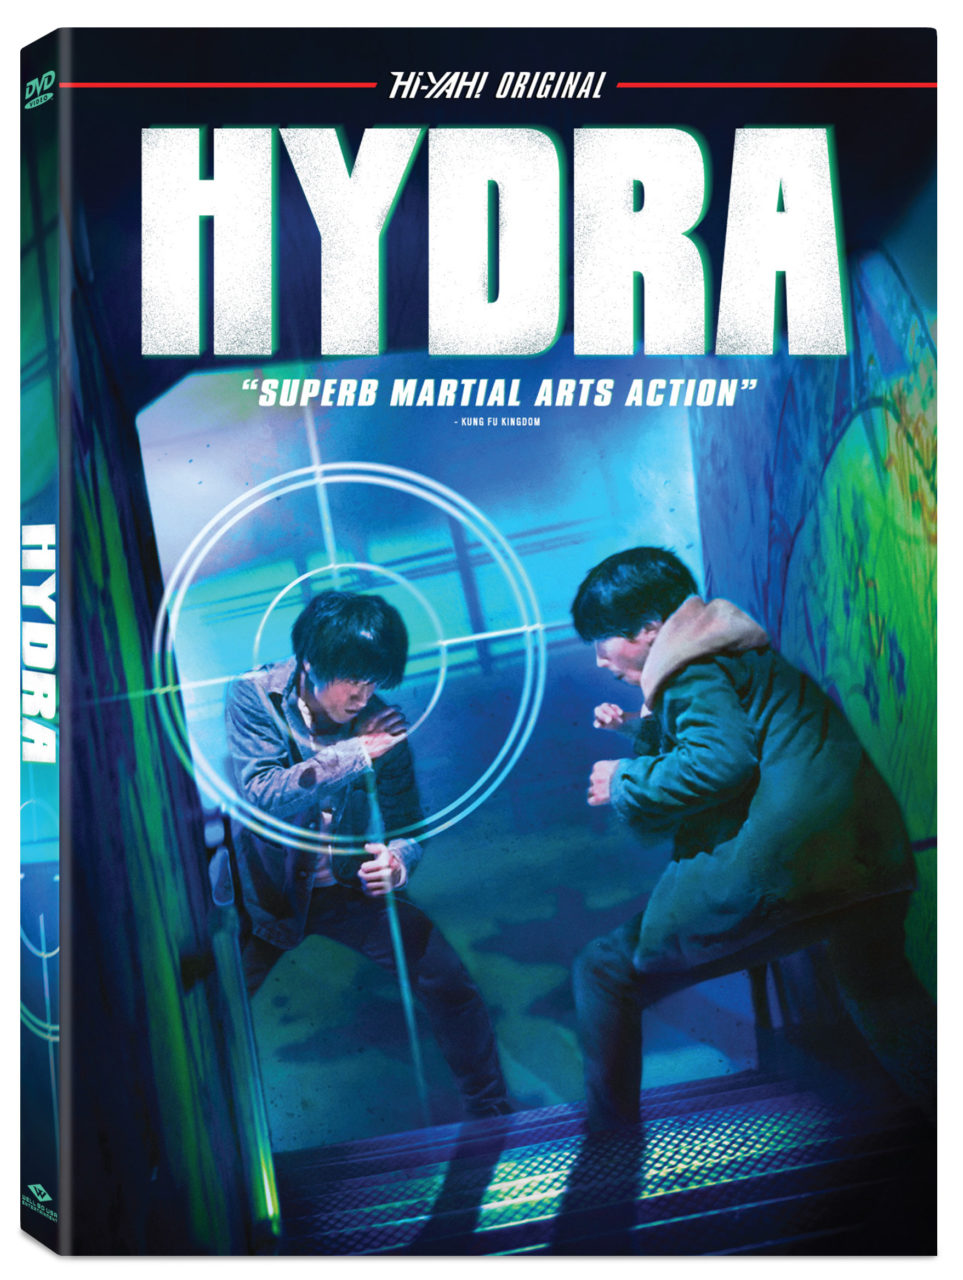 Hydra DVD cover (Well Go USA/Hi-YAH!)